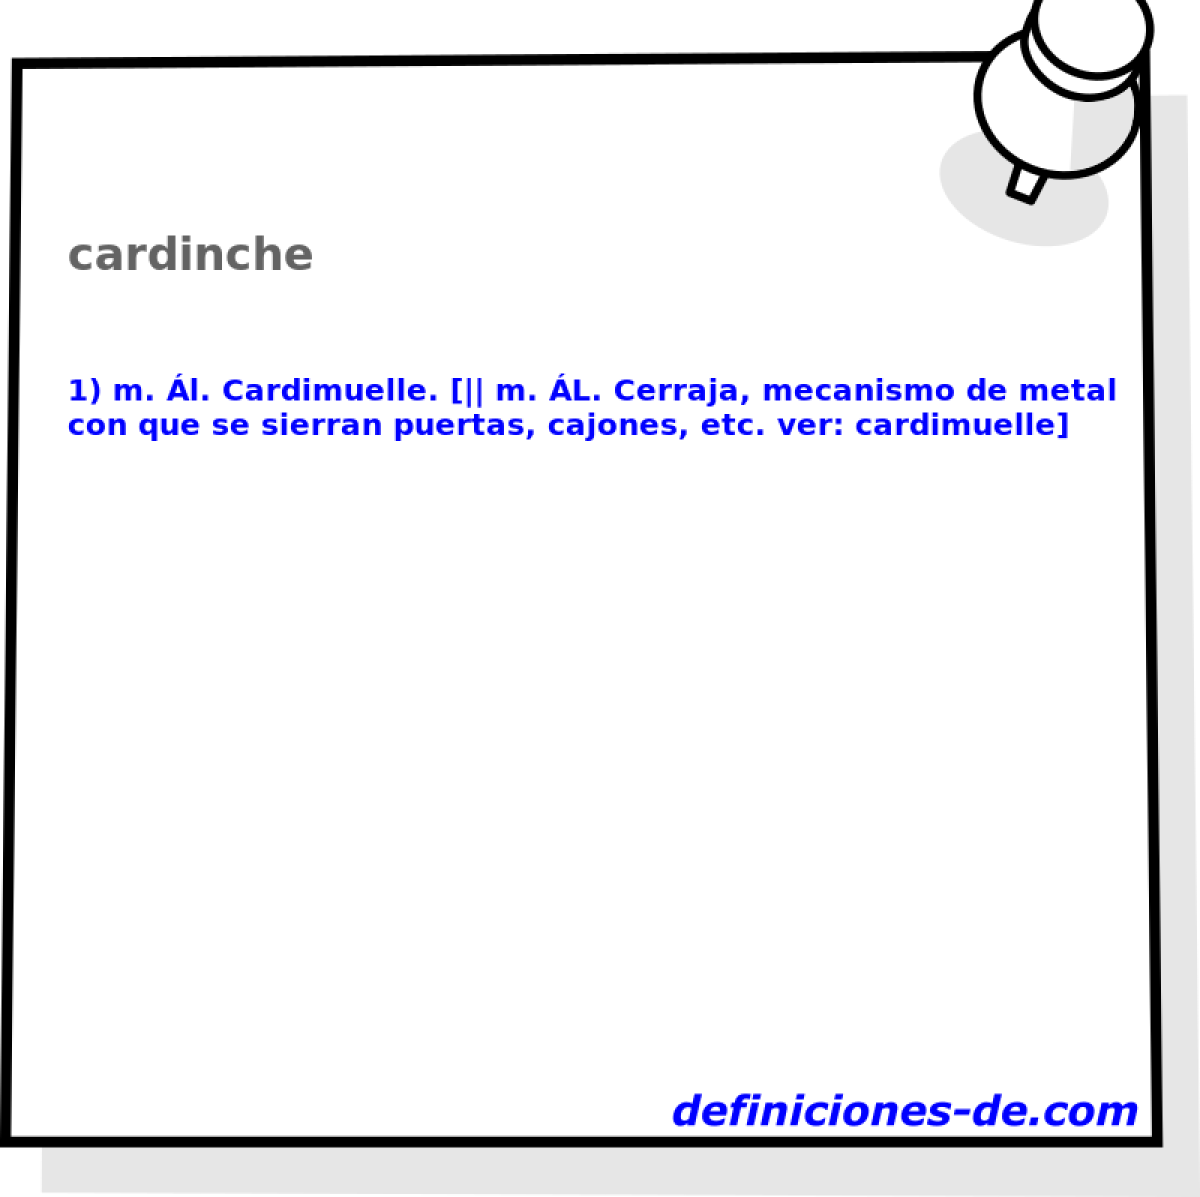 cardinche 